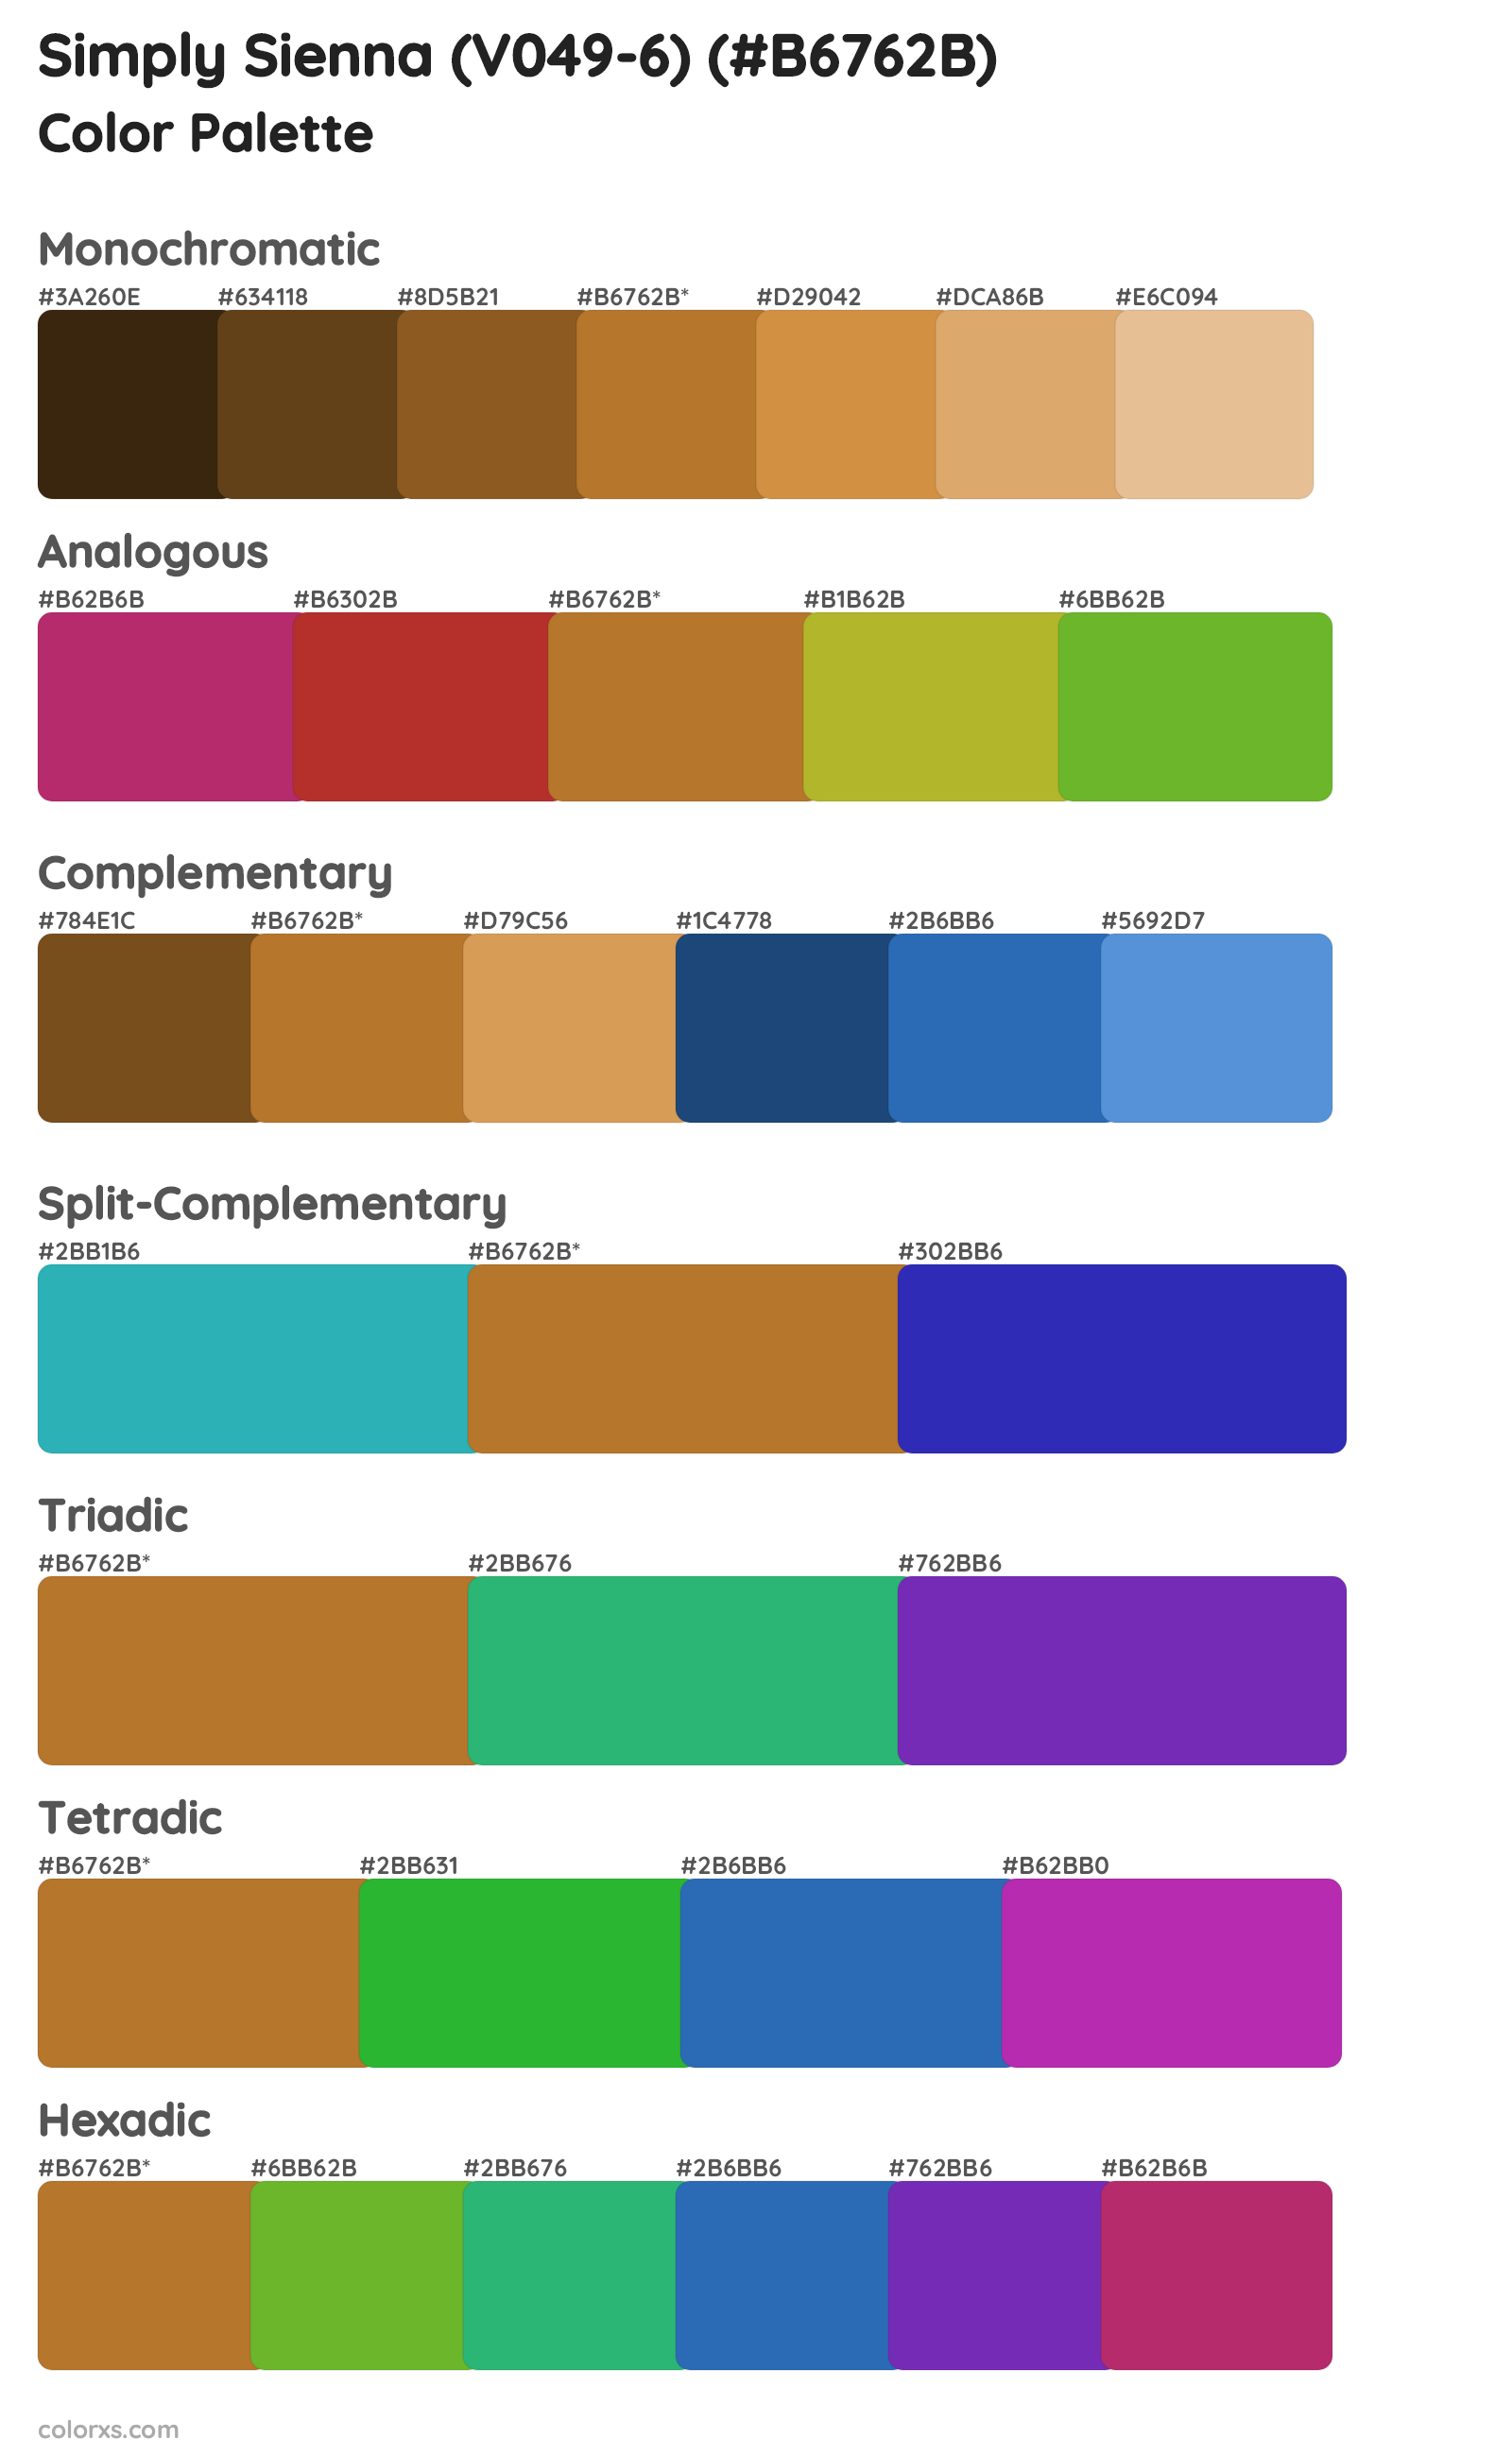 Simply Sienna (V049-6) Color Scheme Palettes